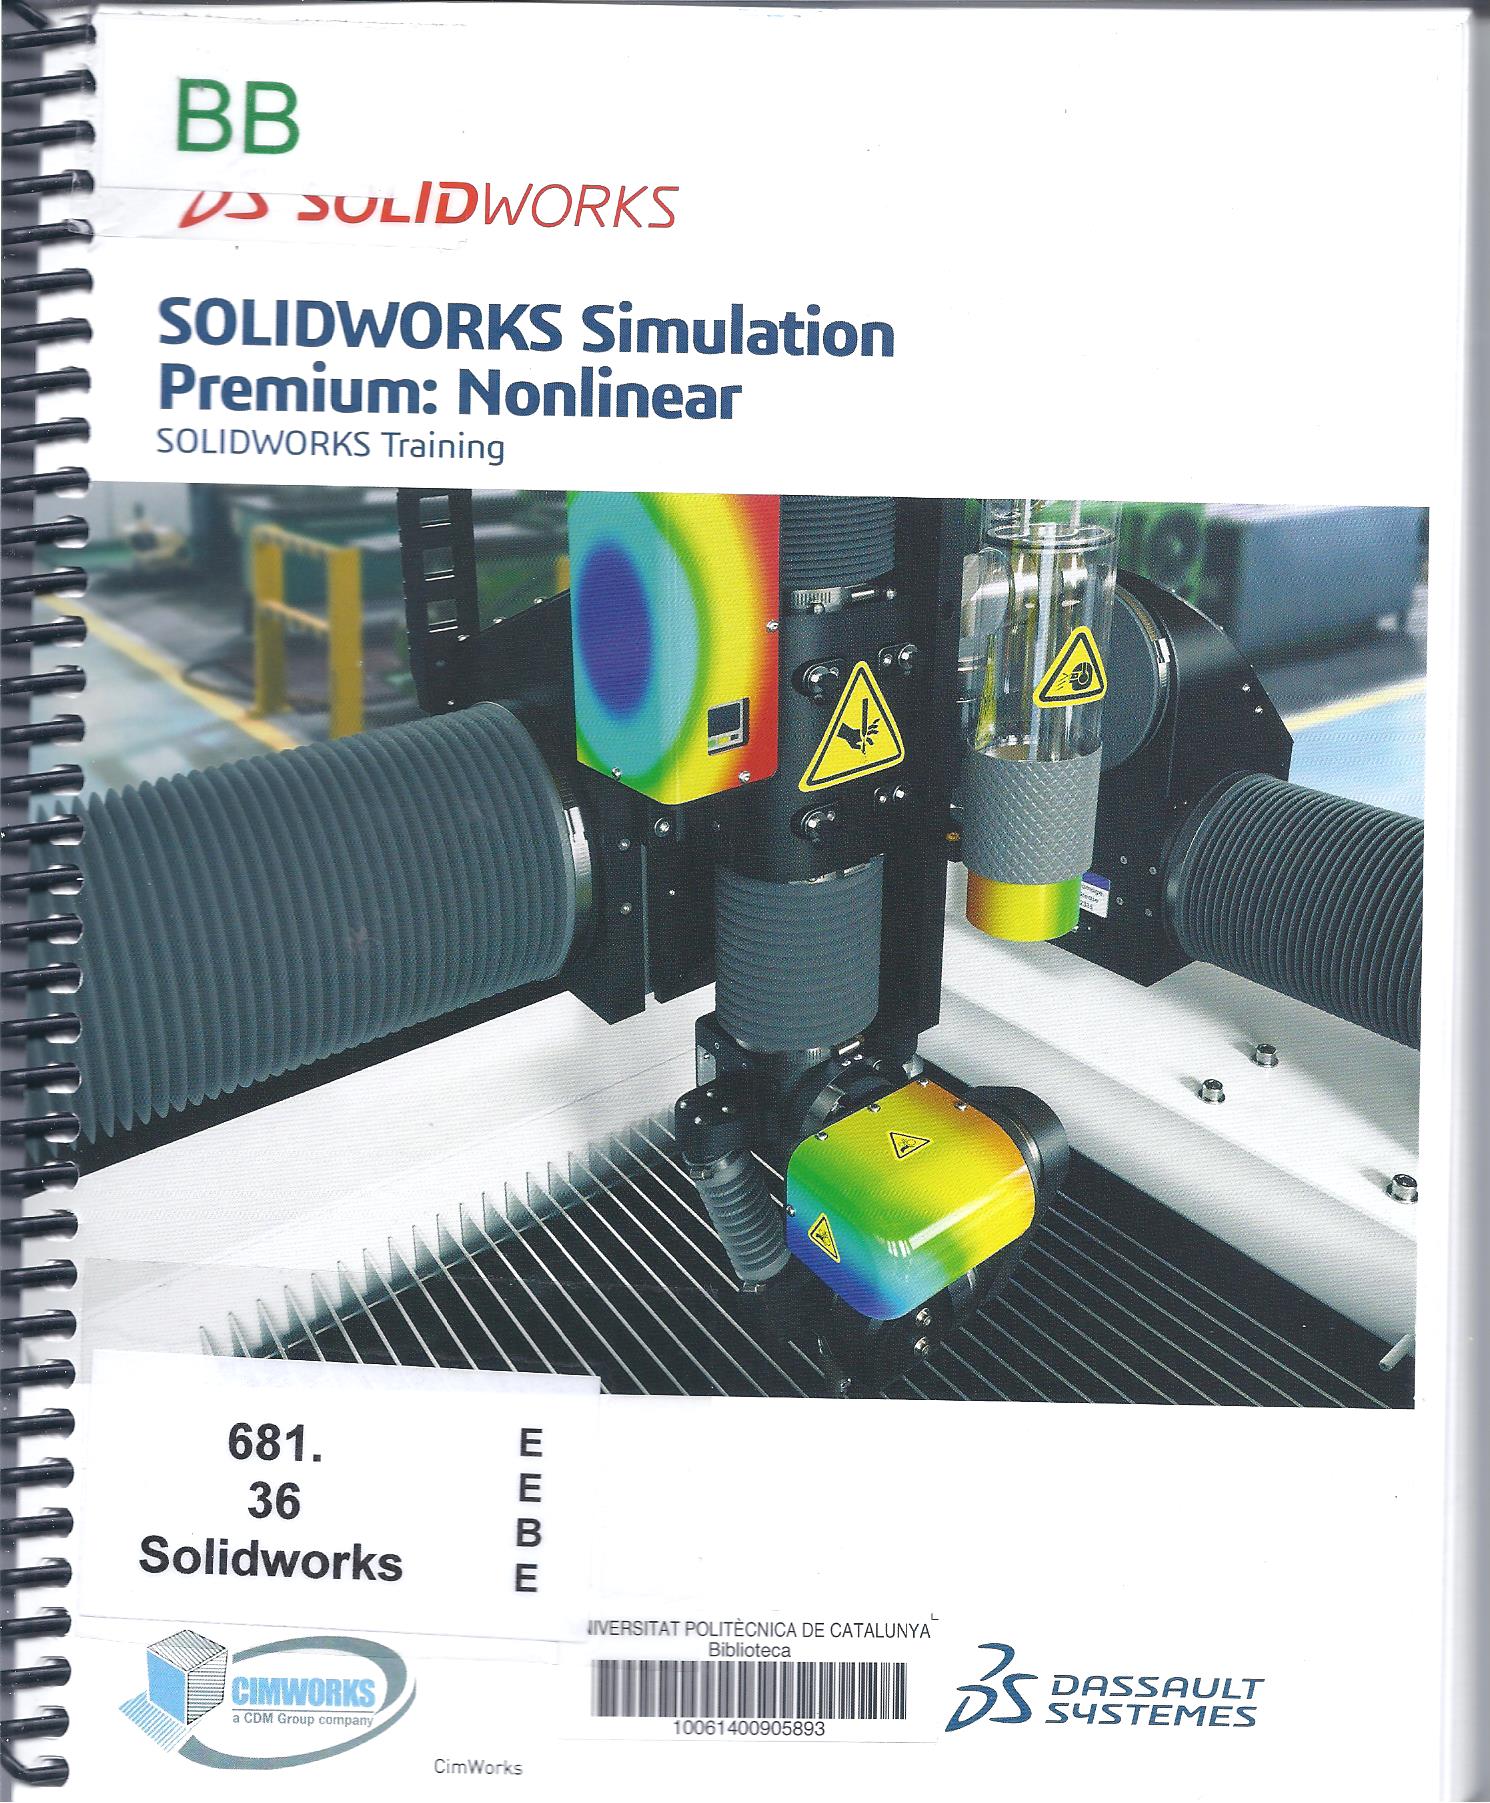 Solidworks simulation premium : Nonlinear/ Solidworks